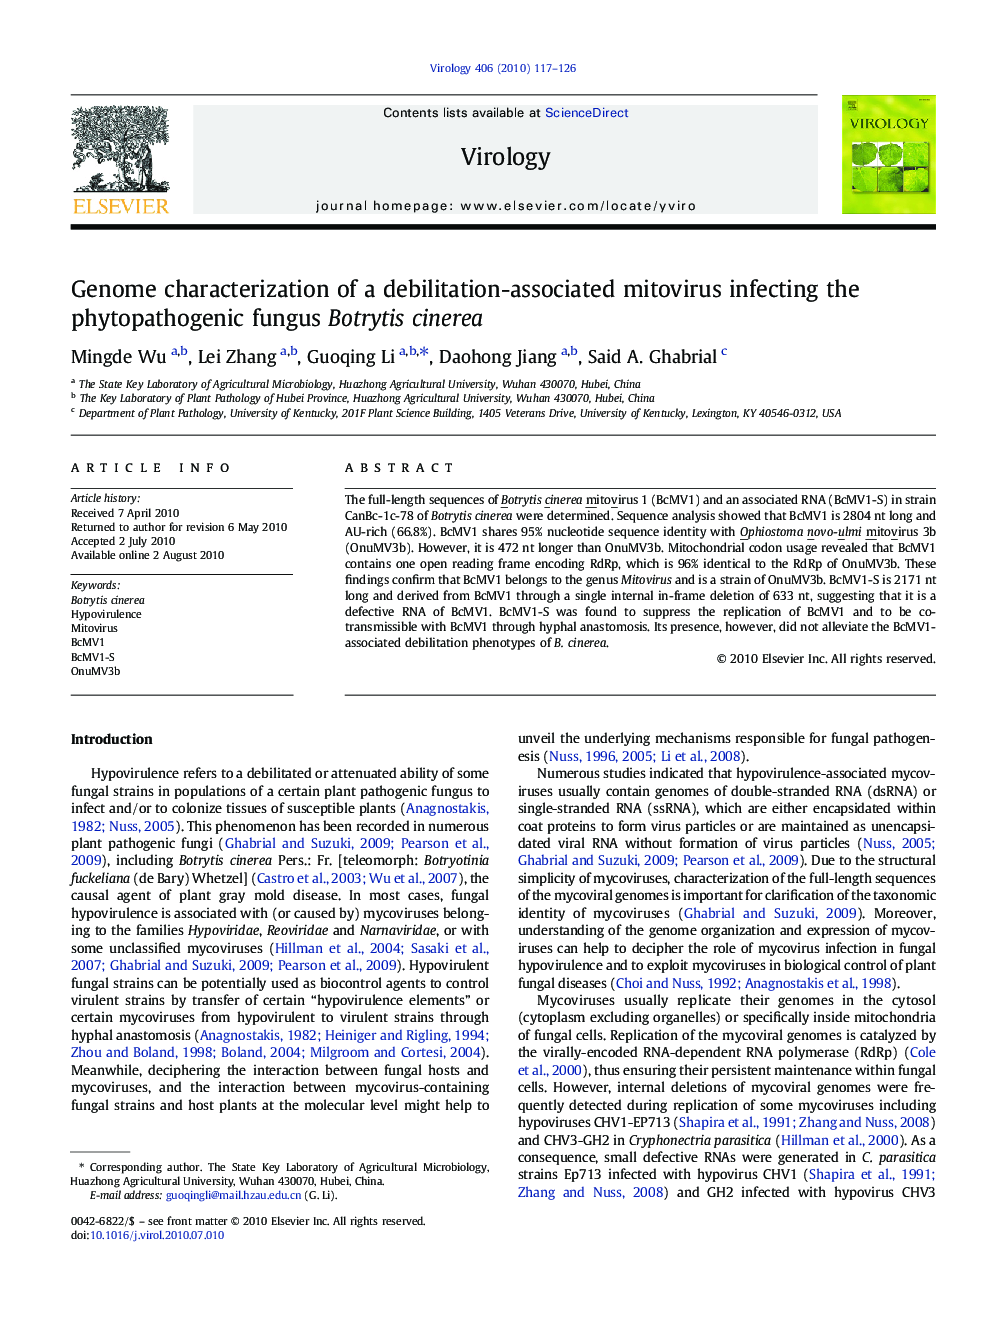 Genome characterization of a debilitation-associated mitovirus infecting the phytopathogenic fungus Botrytis cinerea